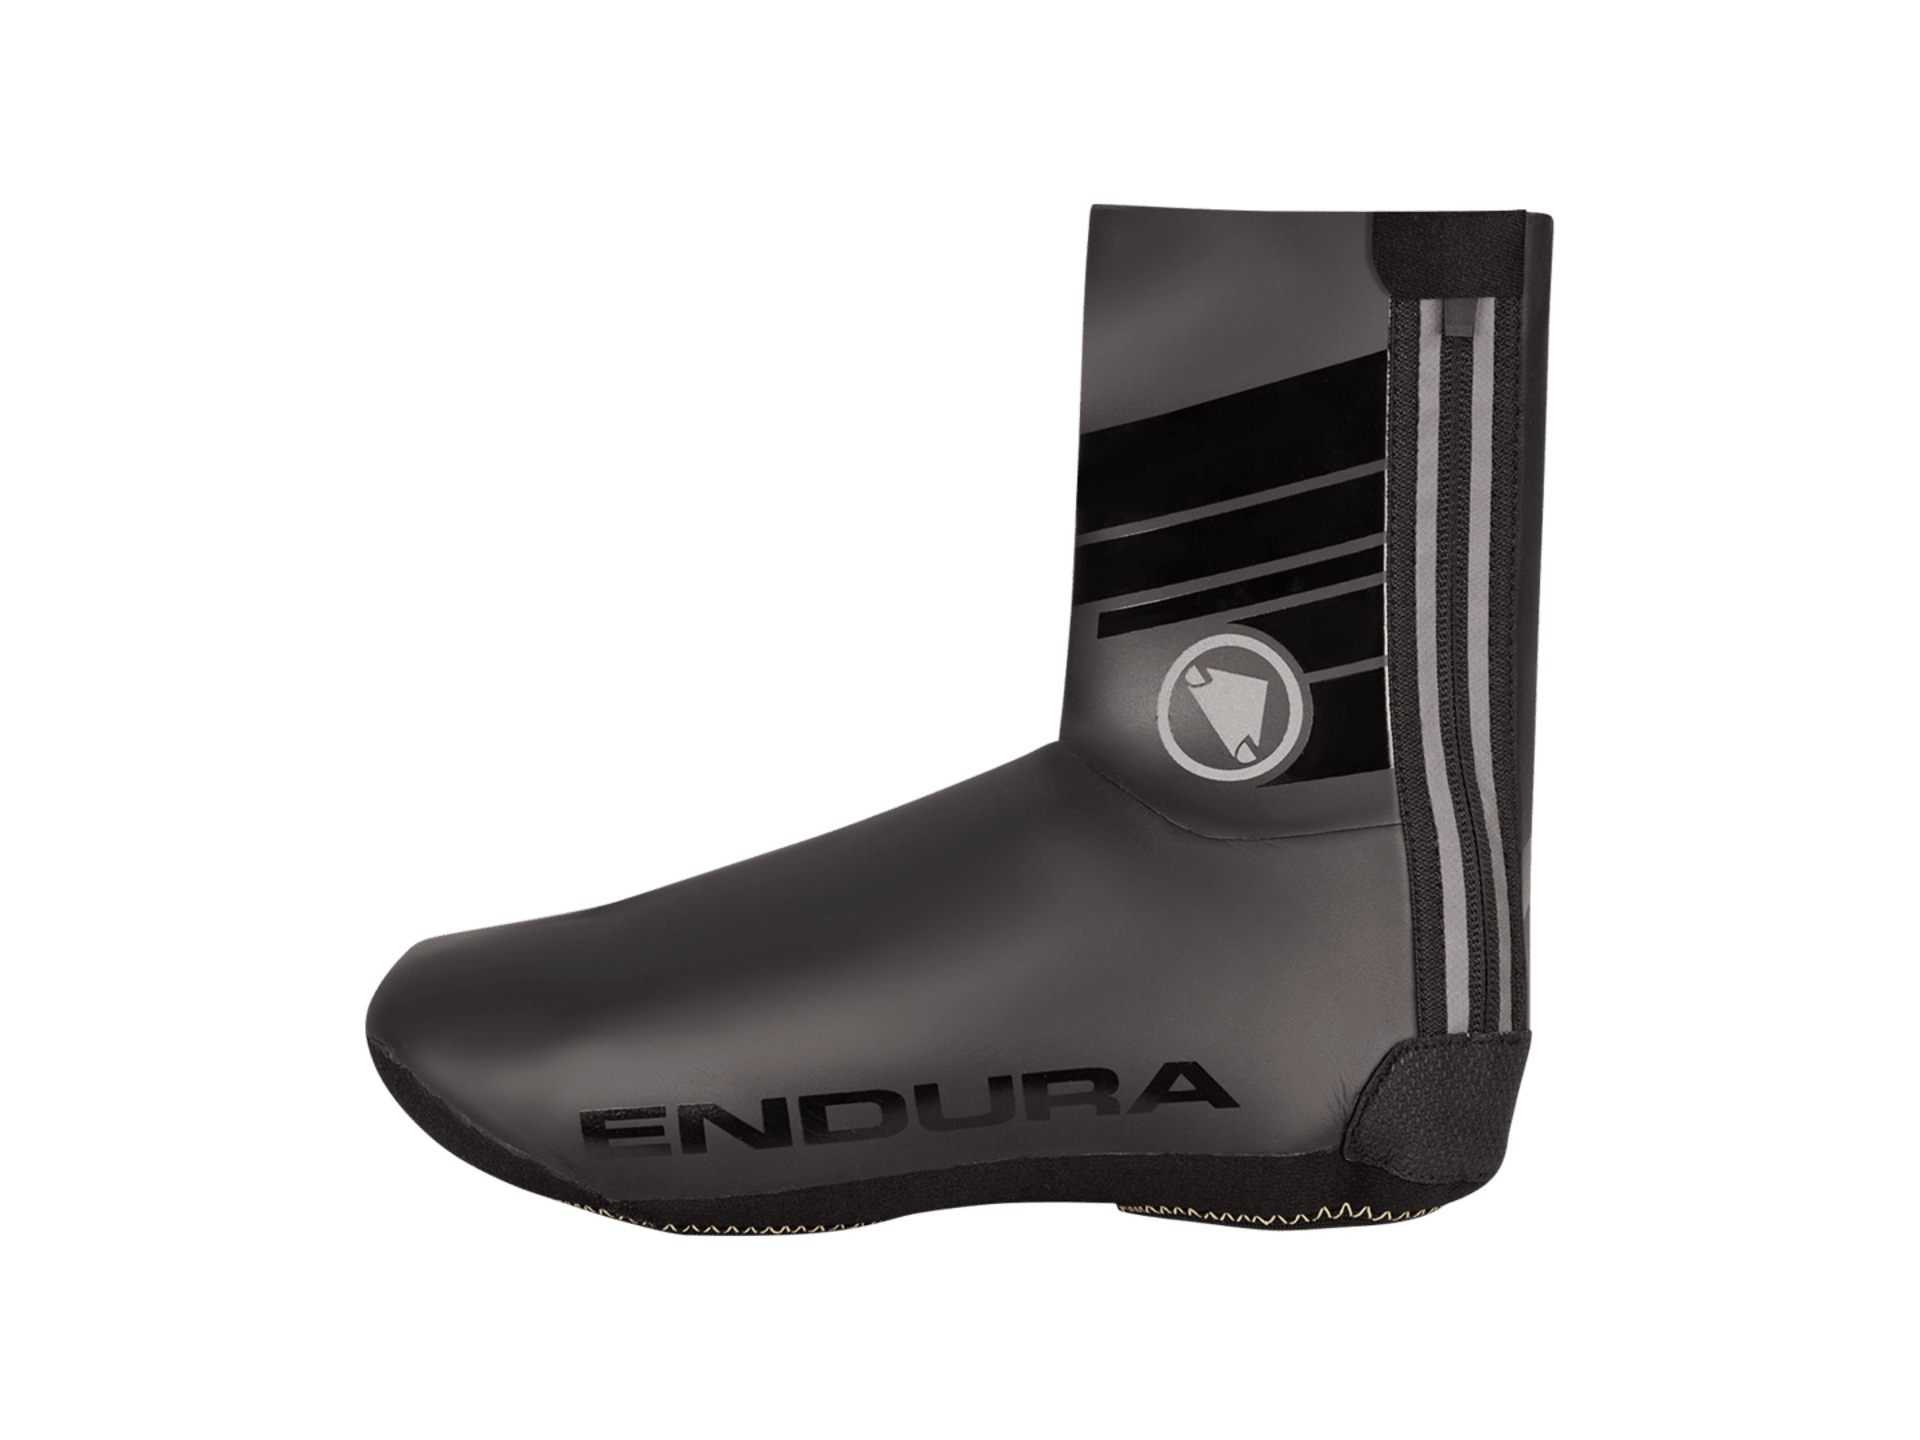 Endura Road Waterproof Shoe Cover